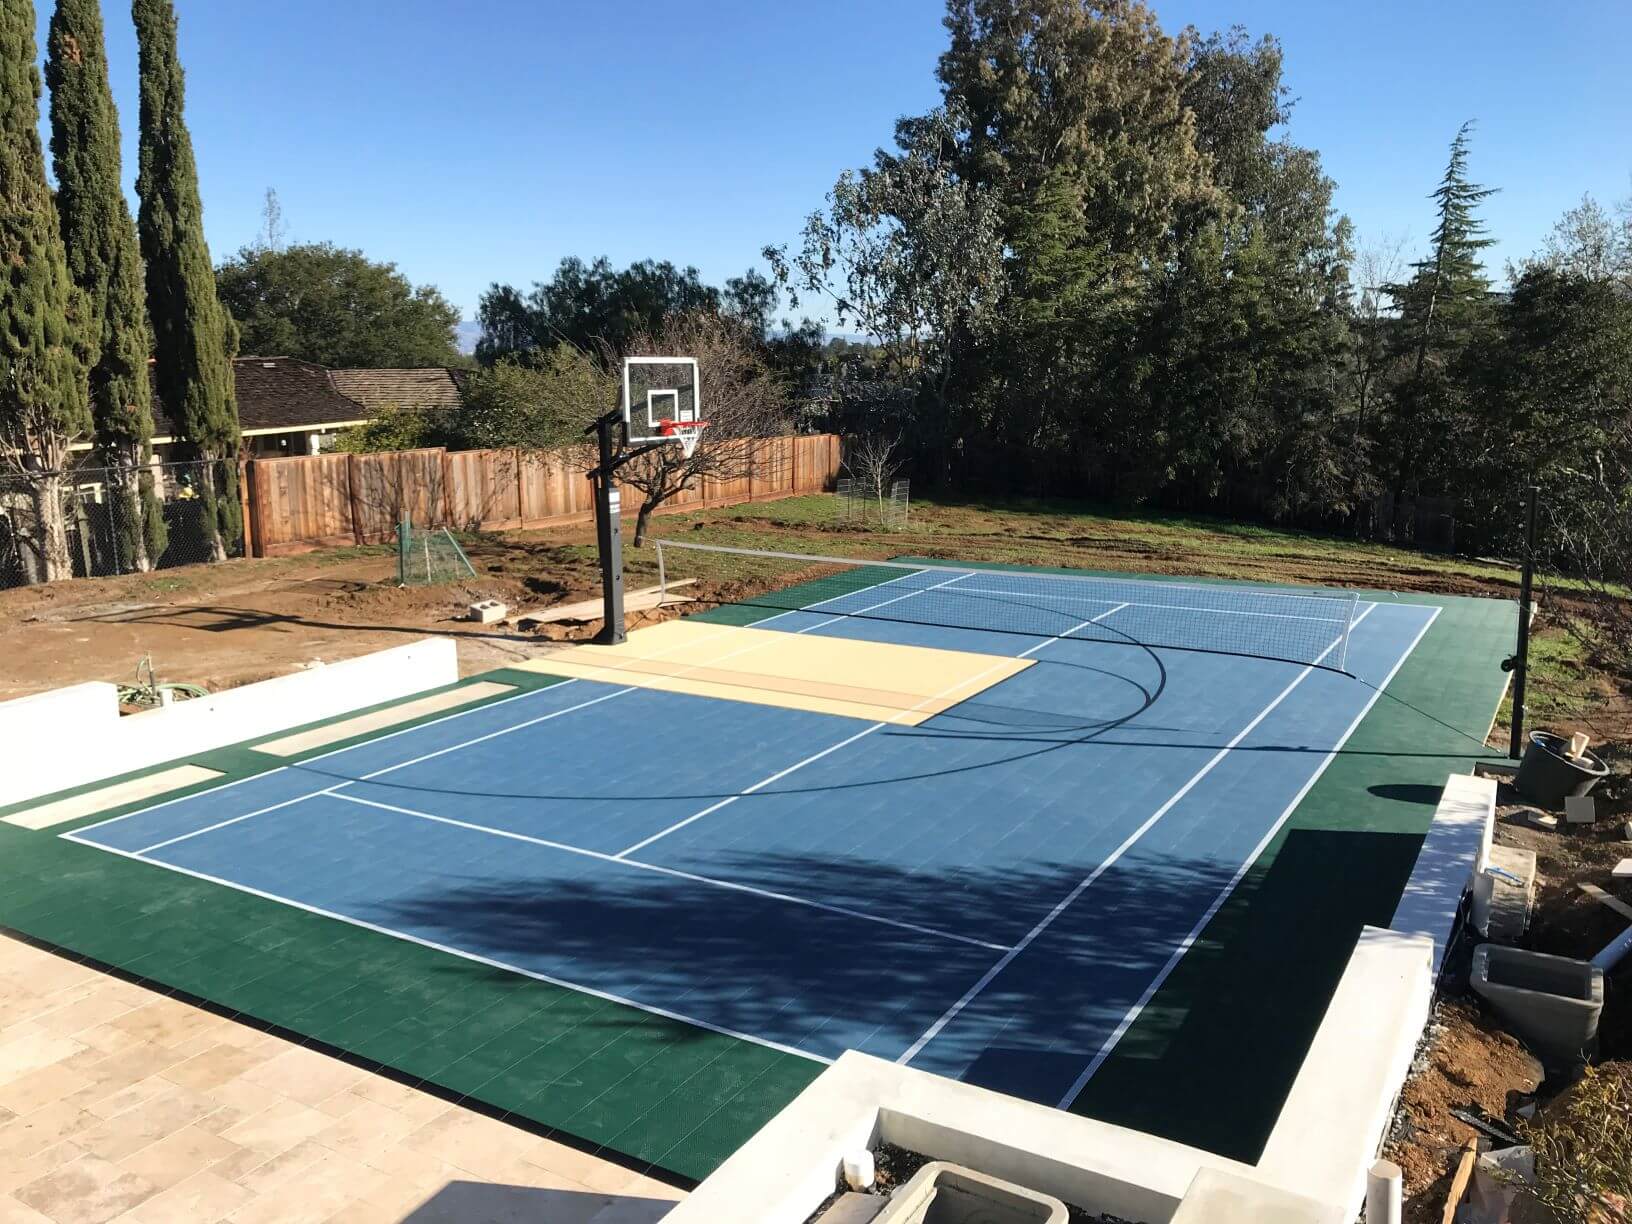 Backyard Residential Multi Sport Court Sport Court® Northern California